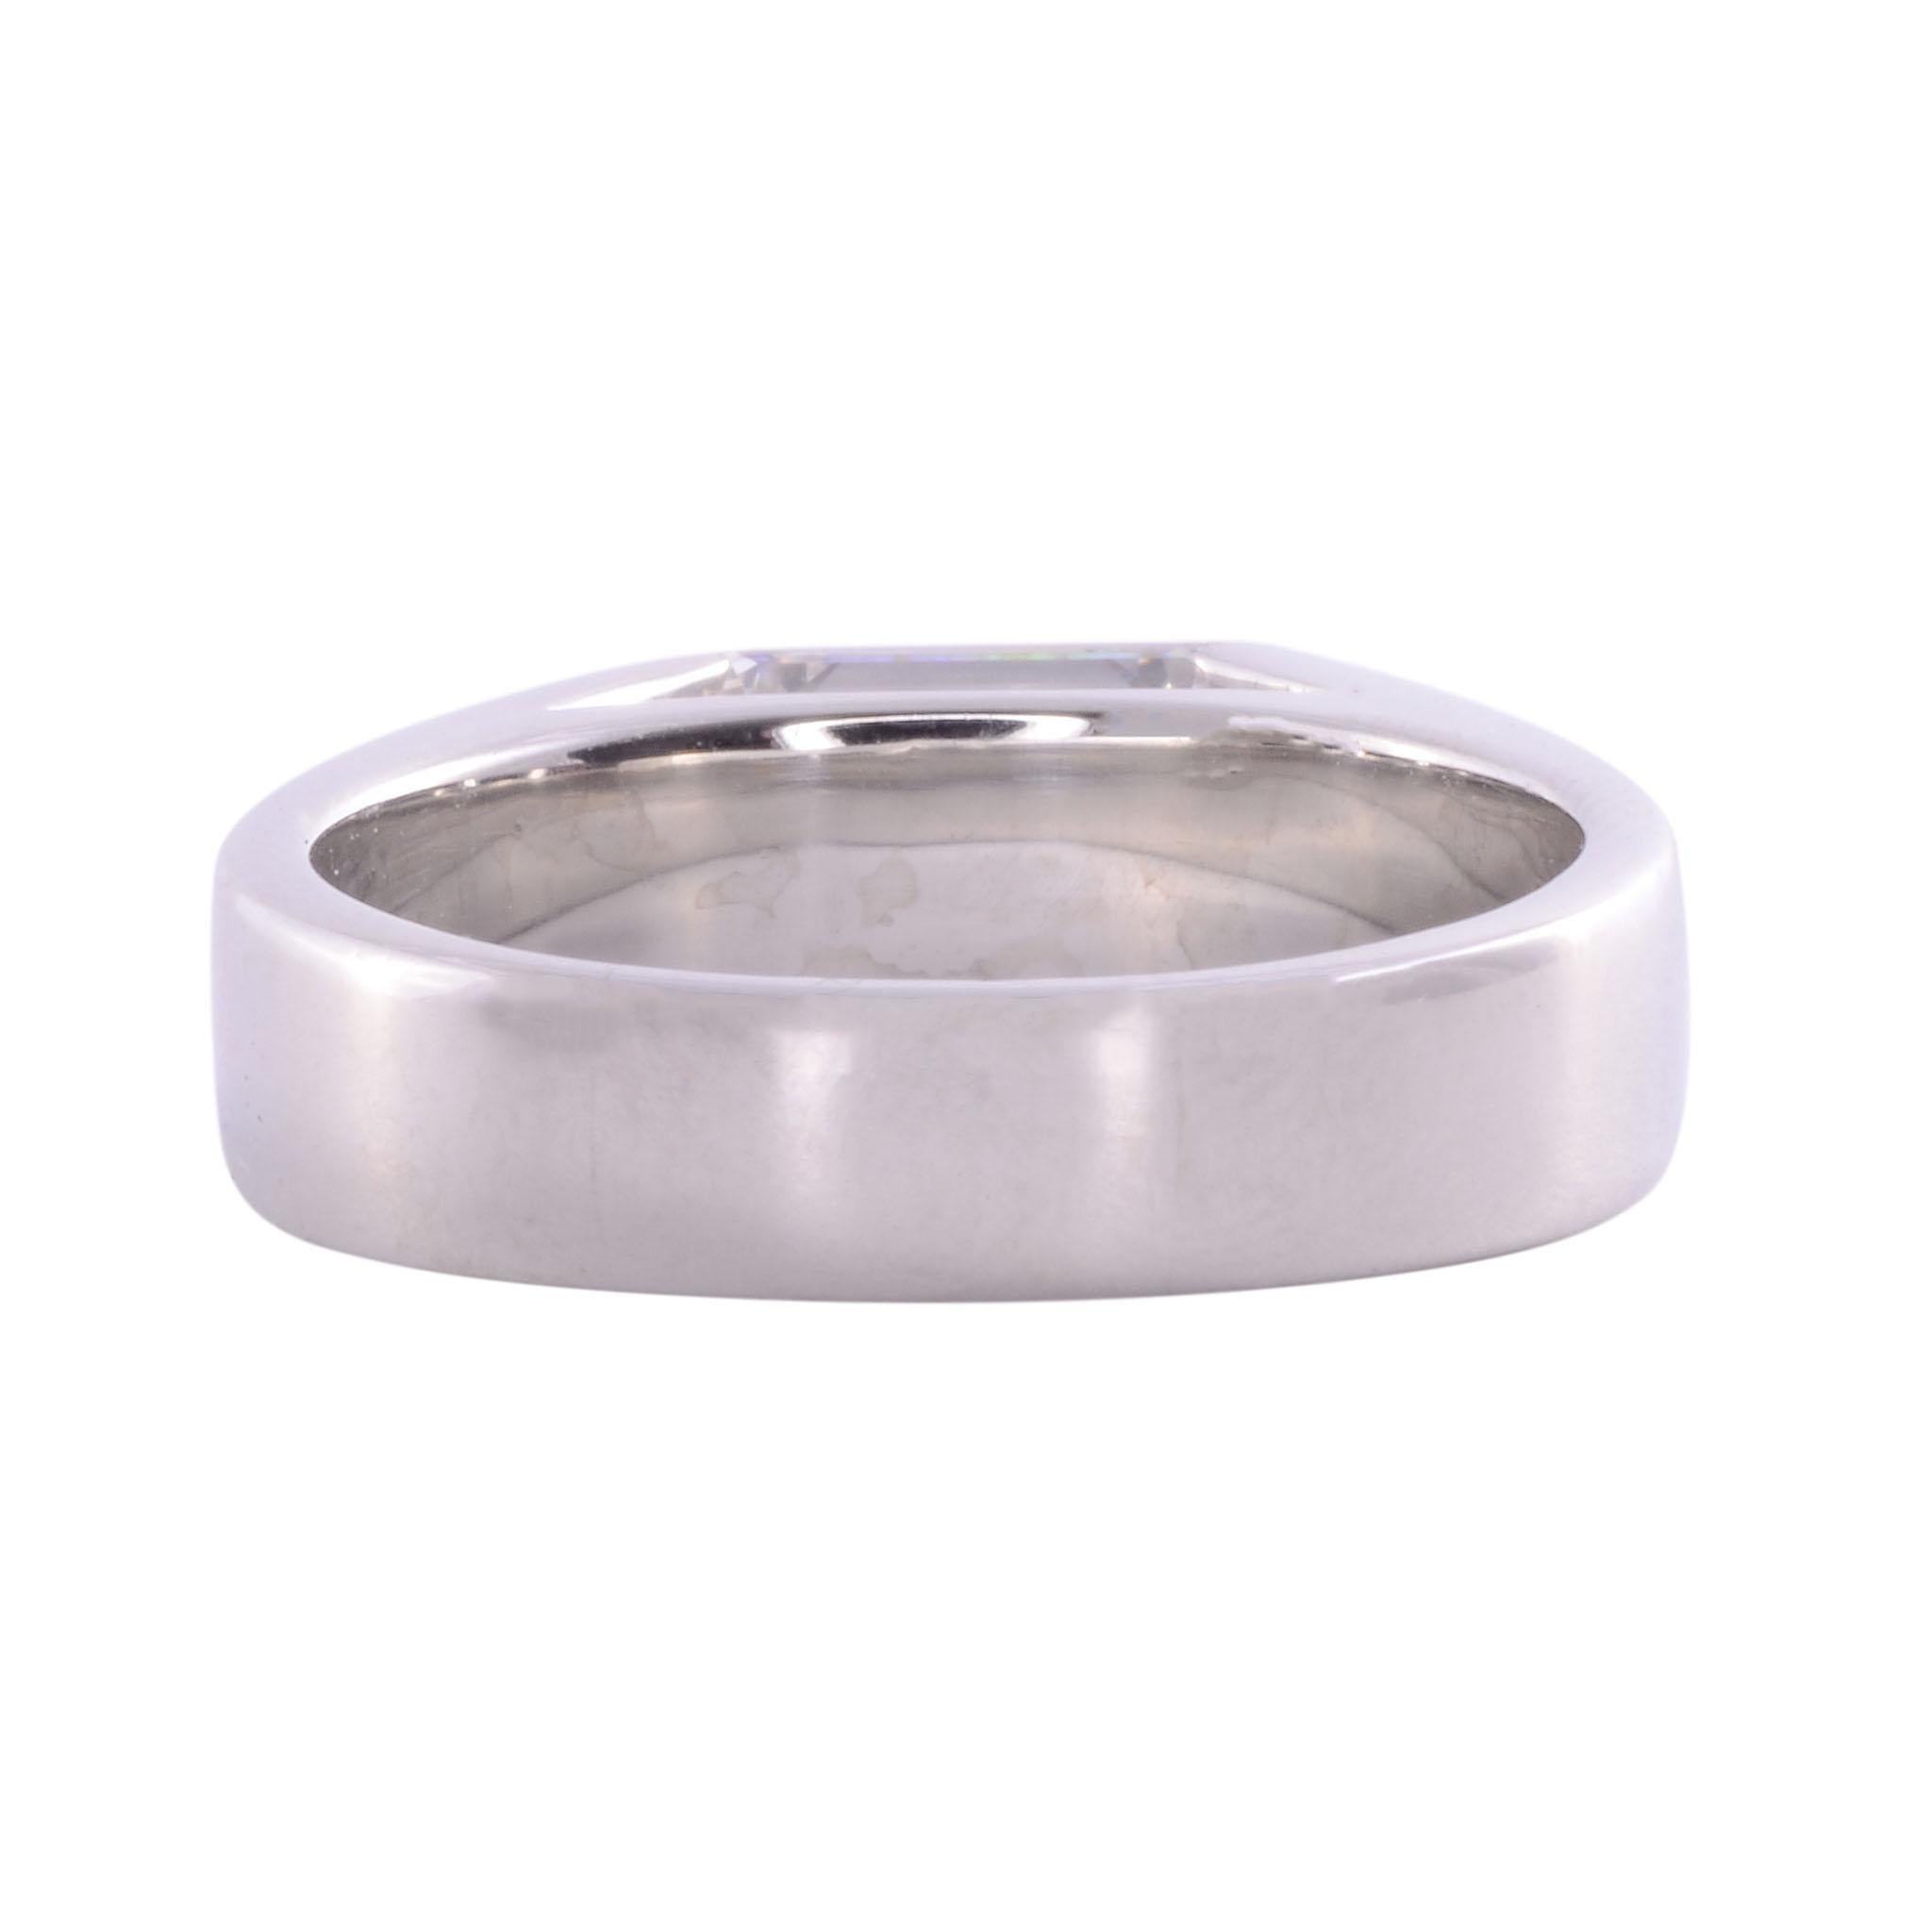 1.73 Carat VVS2 Emerald Cut Diamond Platinum Ring In Good Condition For Sale In Solvang, CA